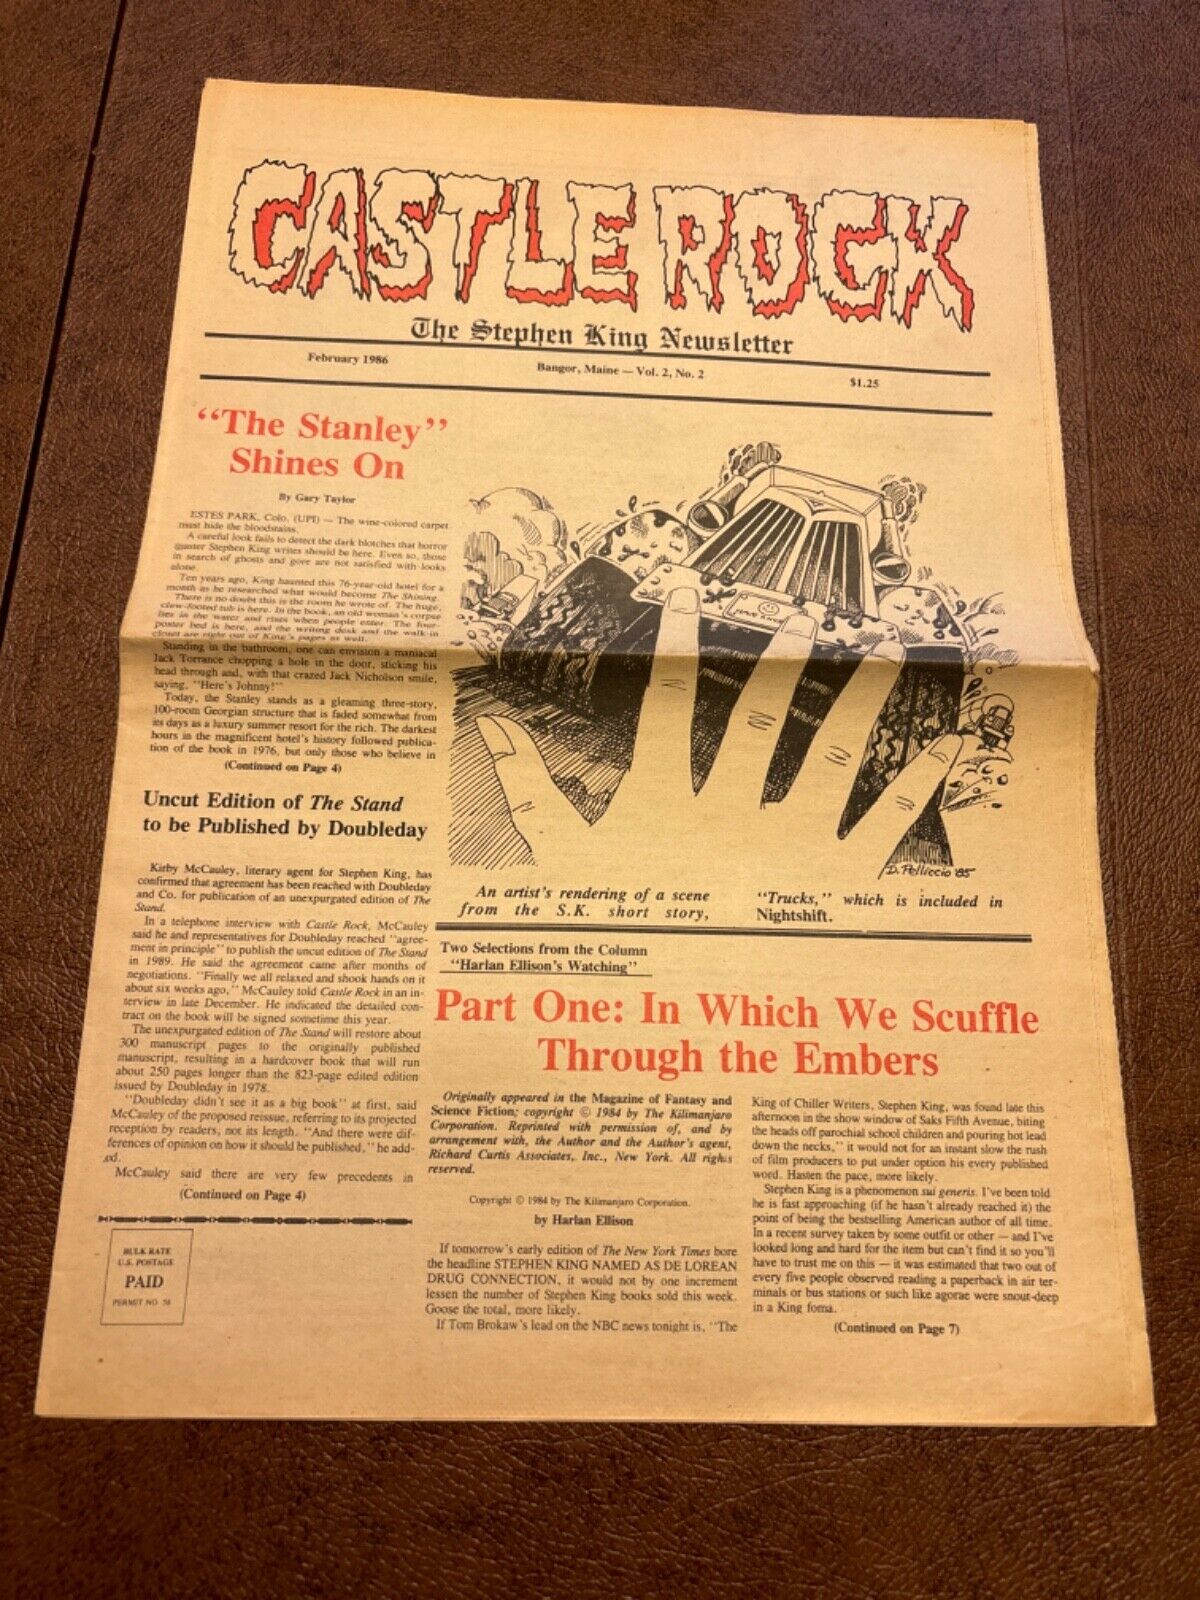 CASTLE ROCK The Stephen King Newsletter  Feb. 1986 Volume 2 No. 2